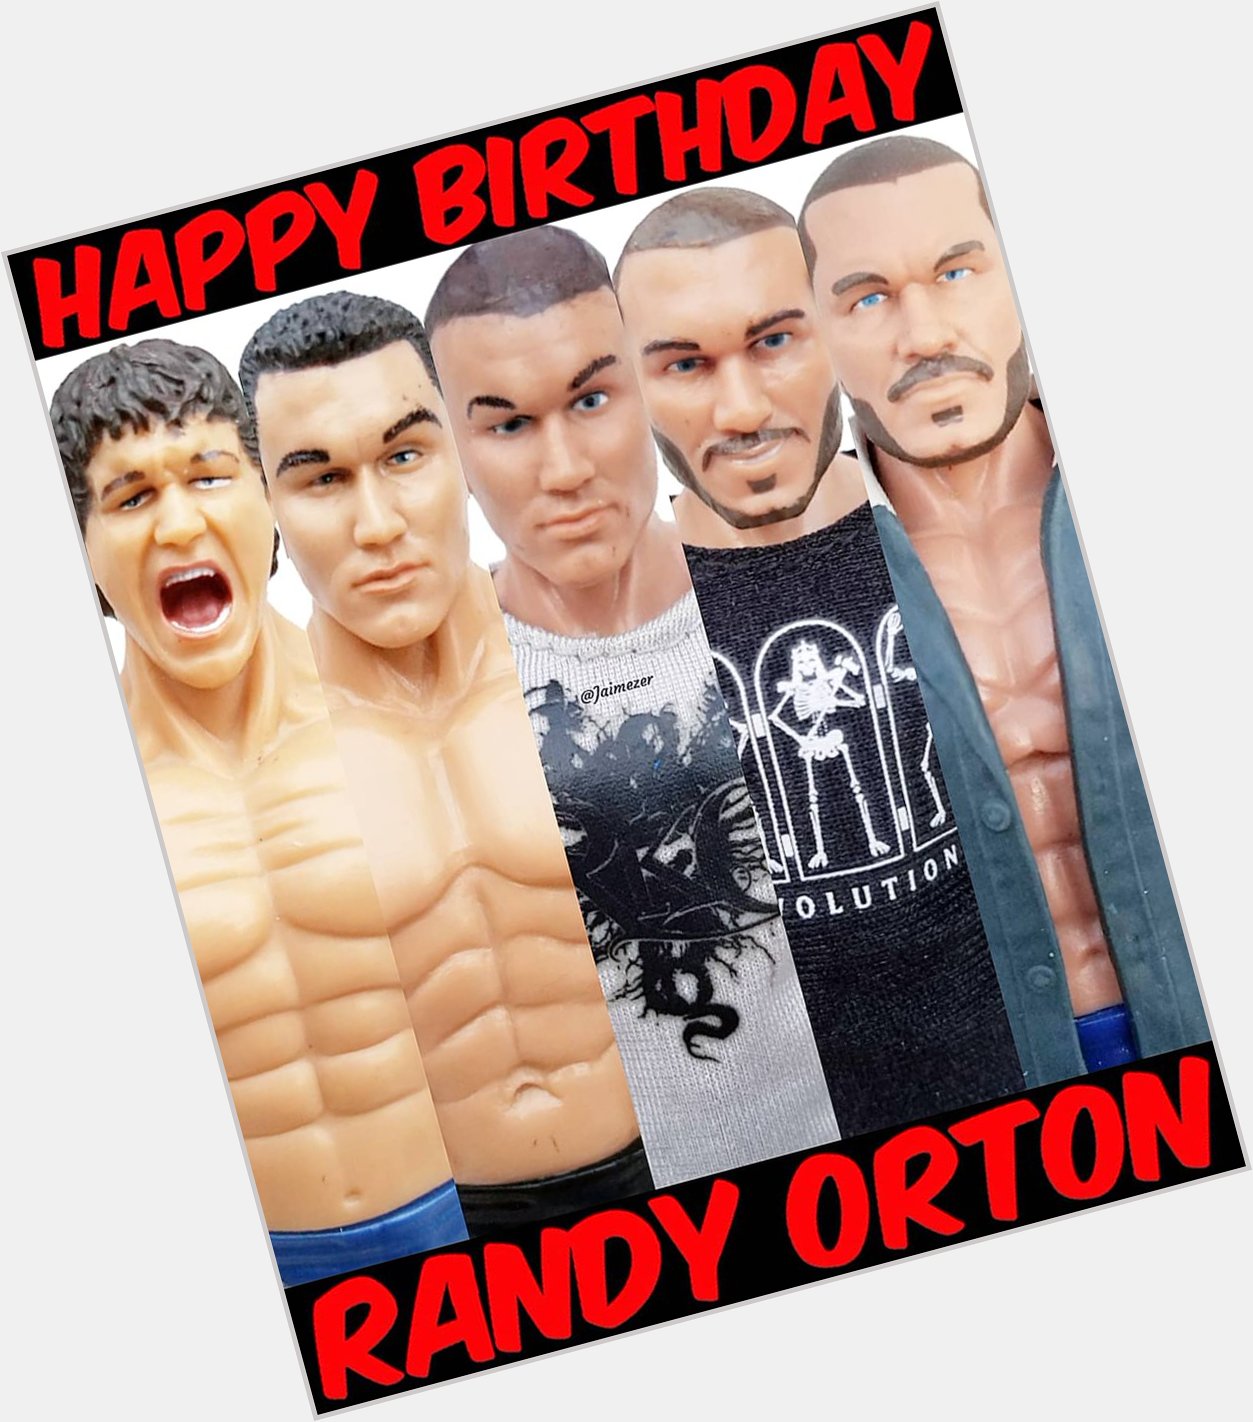 Happy Birthday to Randy Orton!   